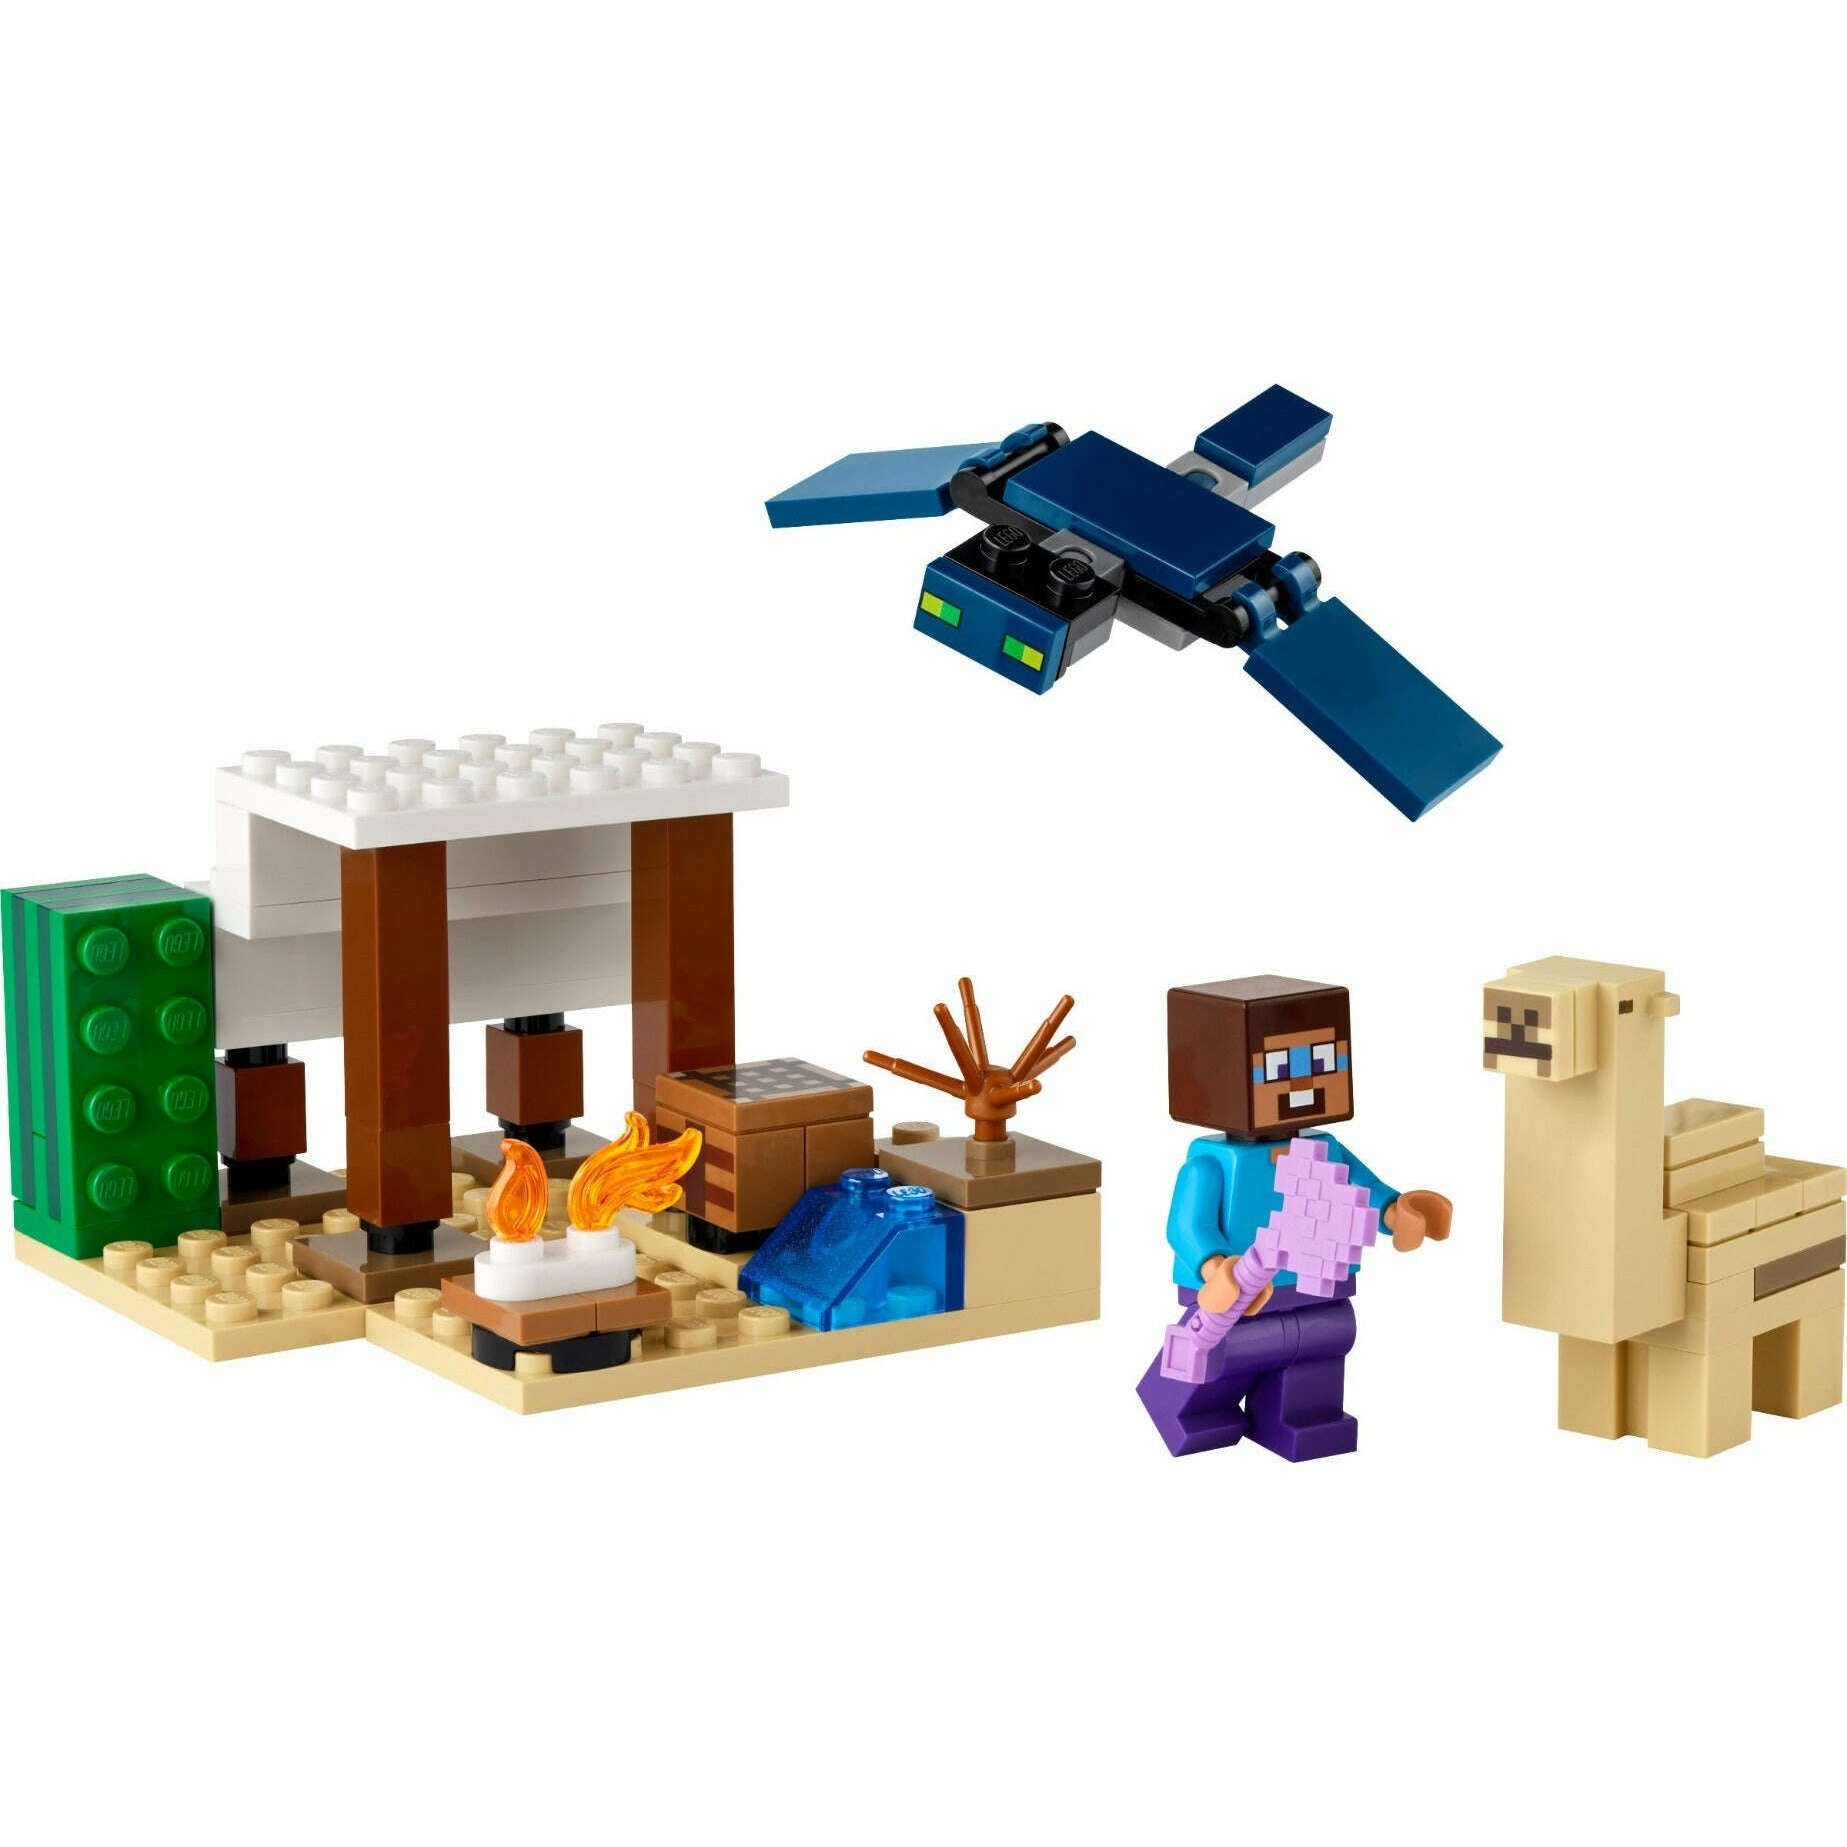 Toys N Tuck:Lego 21251 Minecraft Steve's Desert Expedition,Lego Minecraft